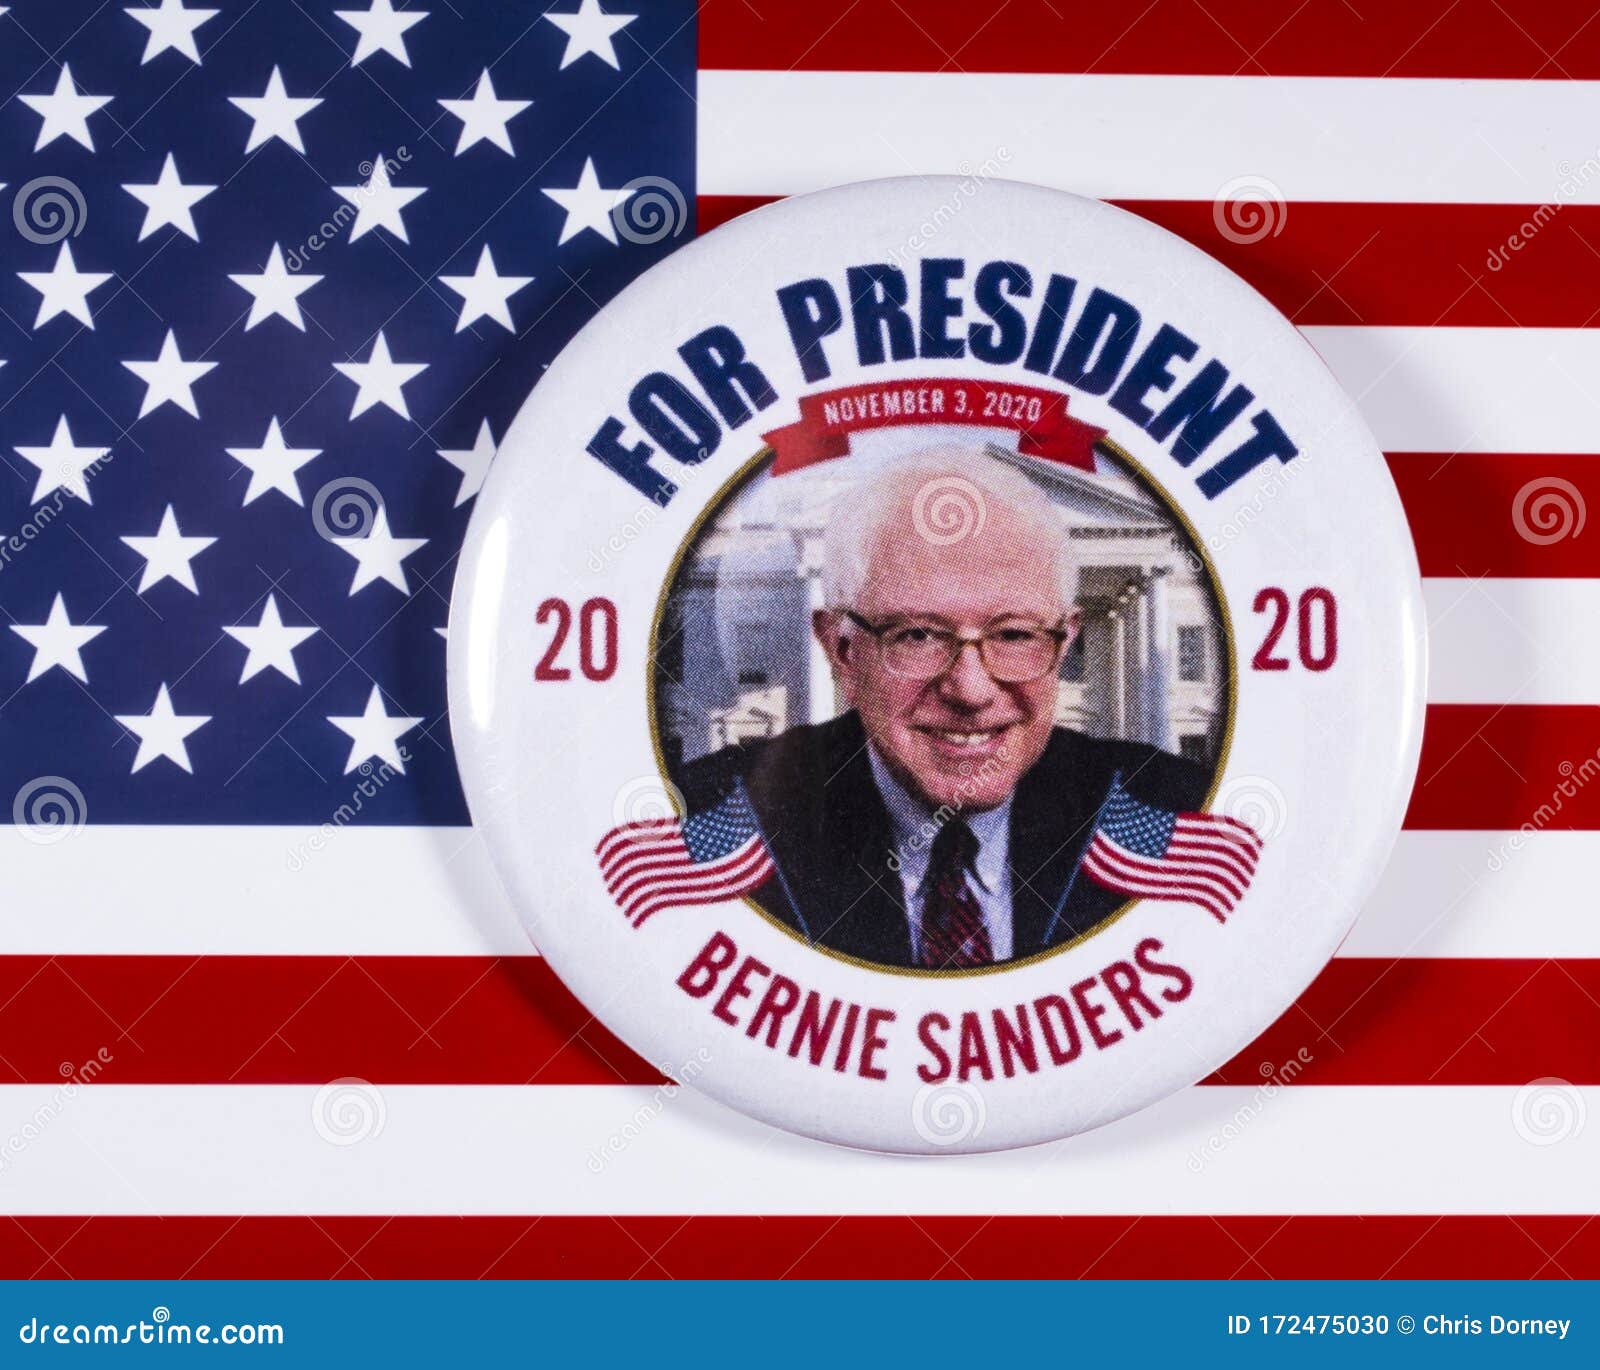 Bernie Sanders for Pressident 2020 USA Vote Pin Badge Medal Campaign Brooch. 